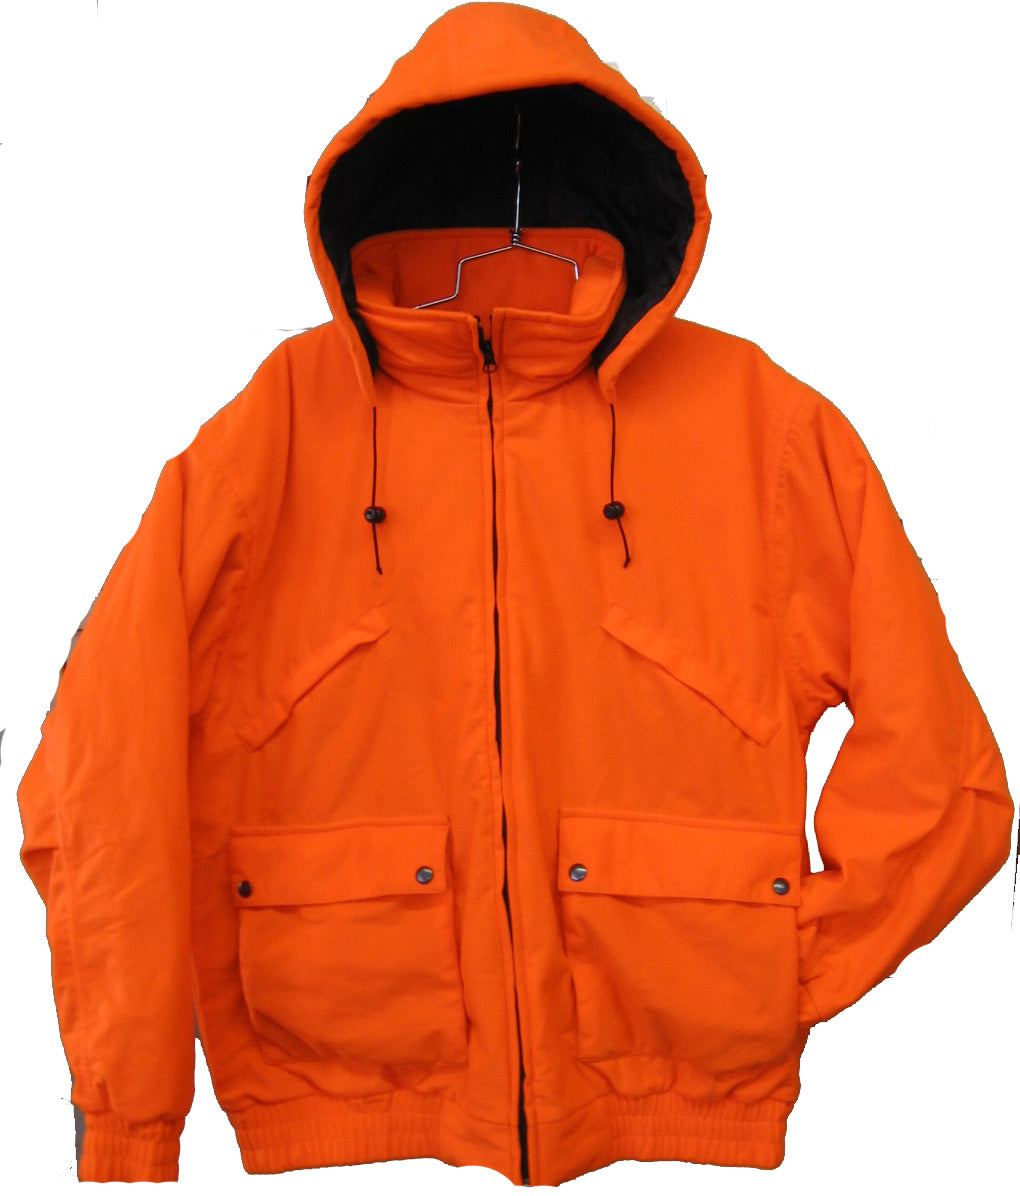 Men's Safety Blaze Orange Insulated & Waterproof Tanker Jacket